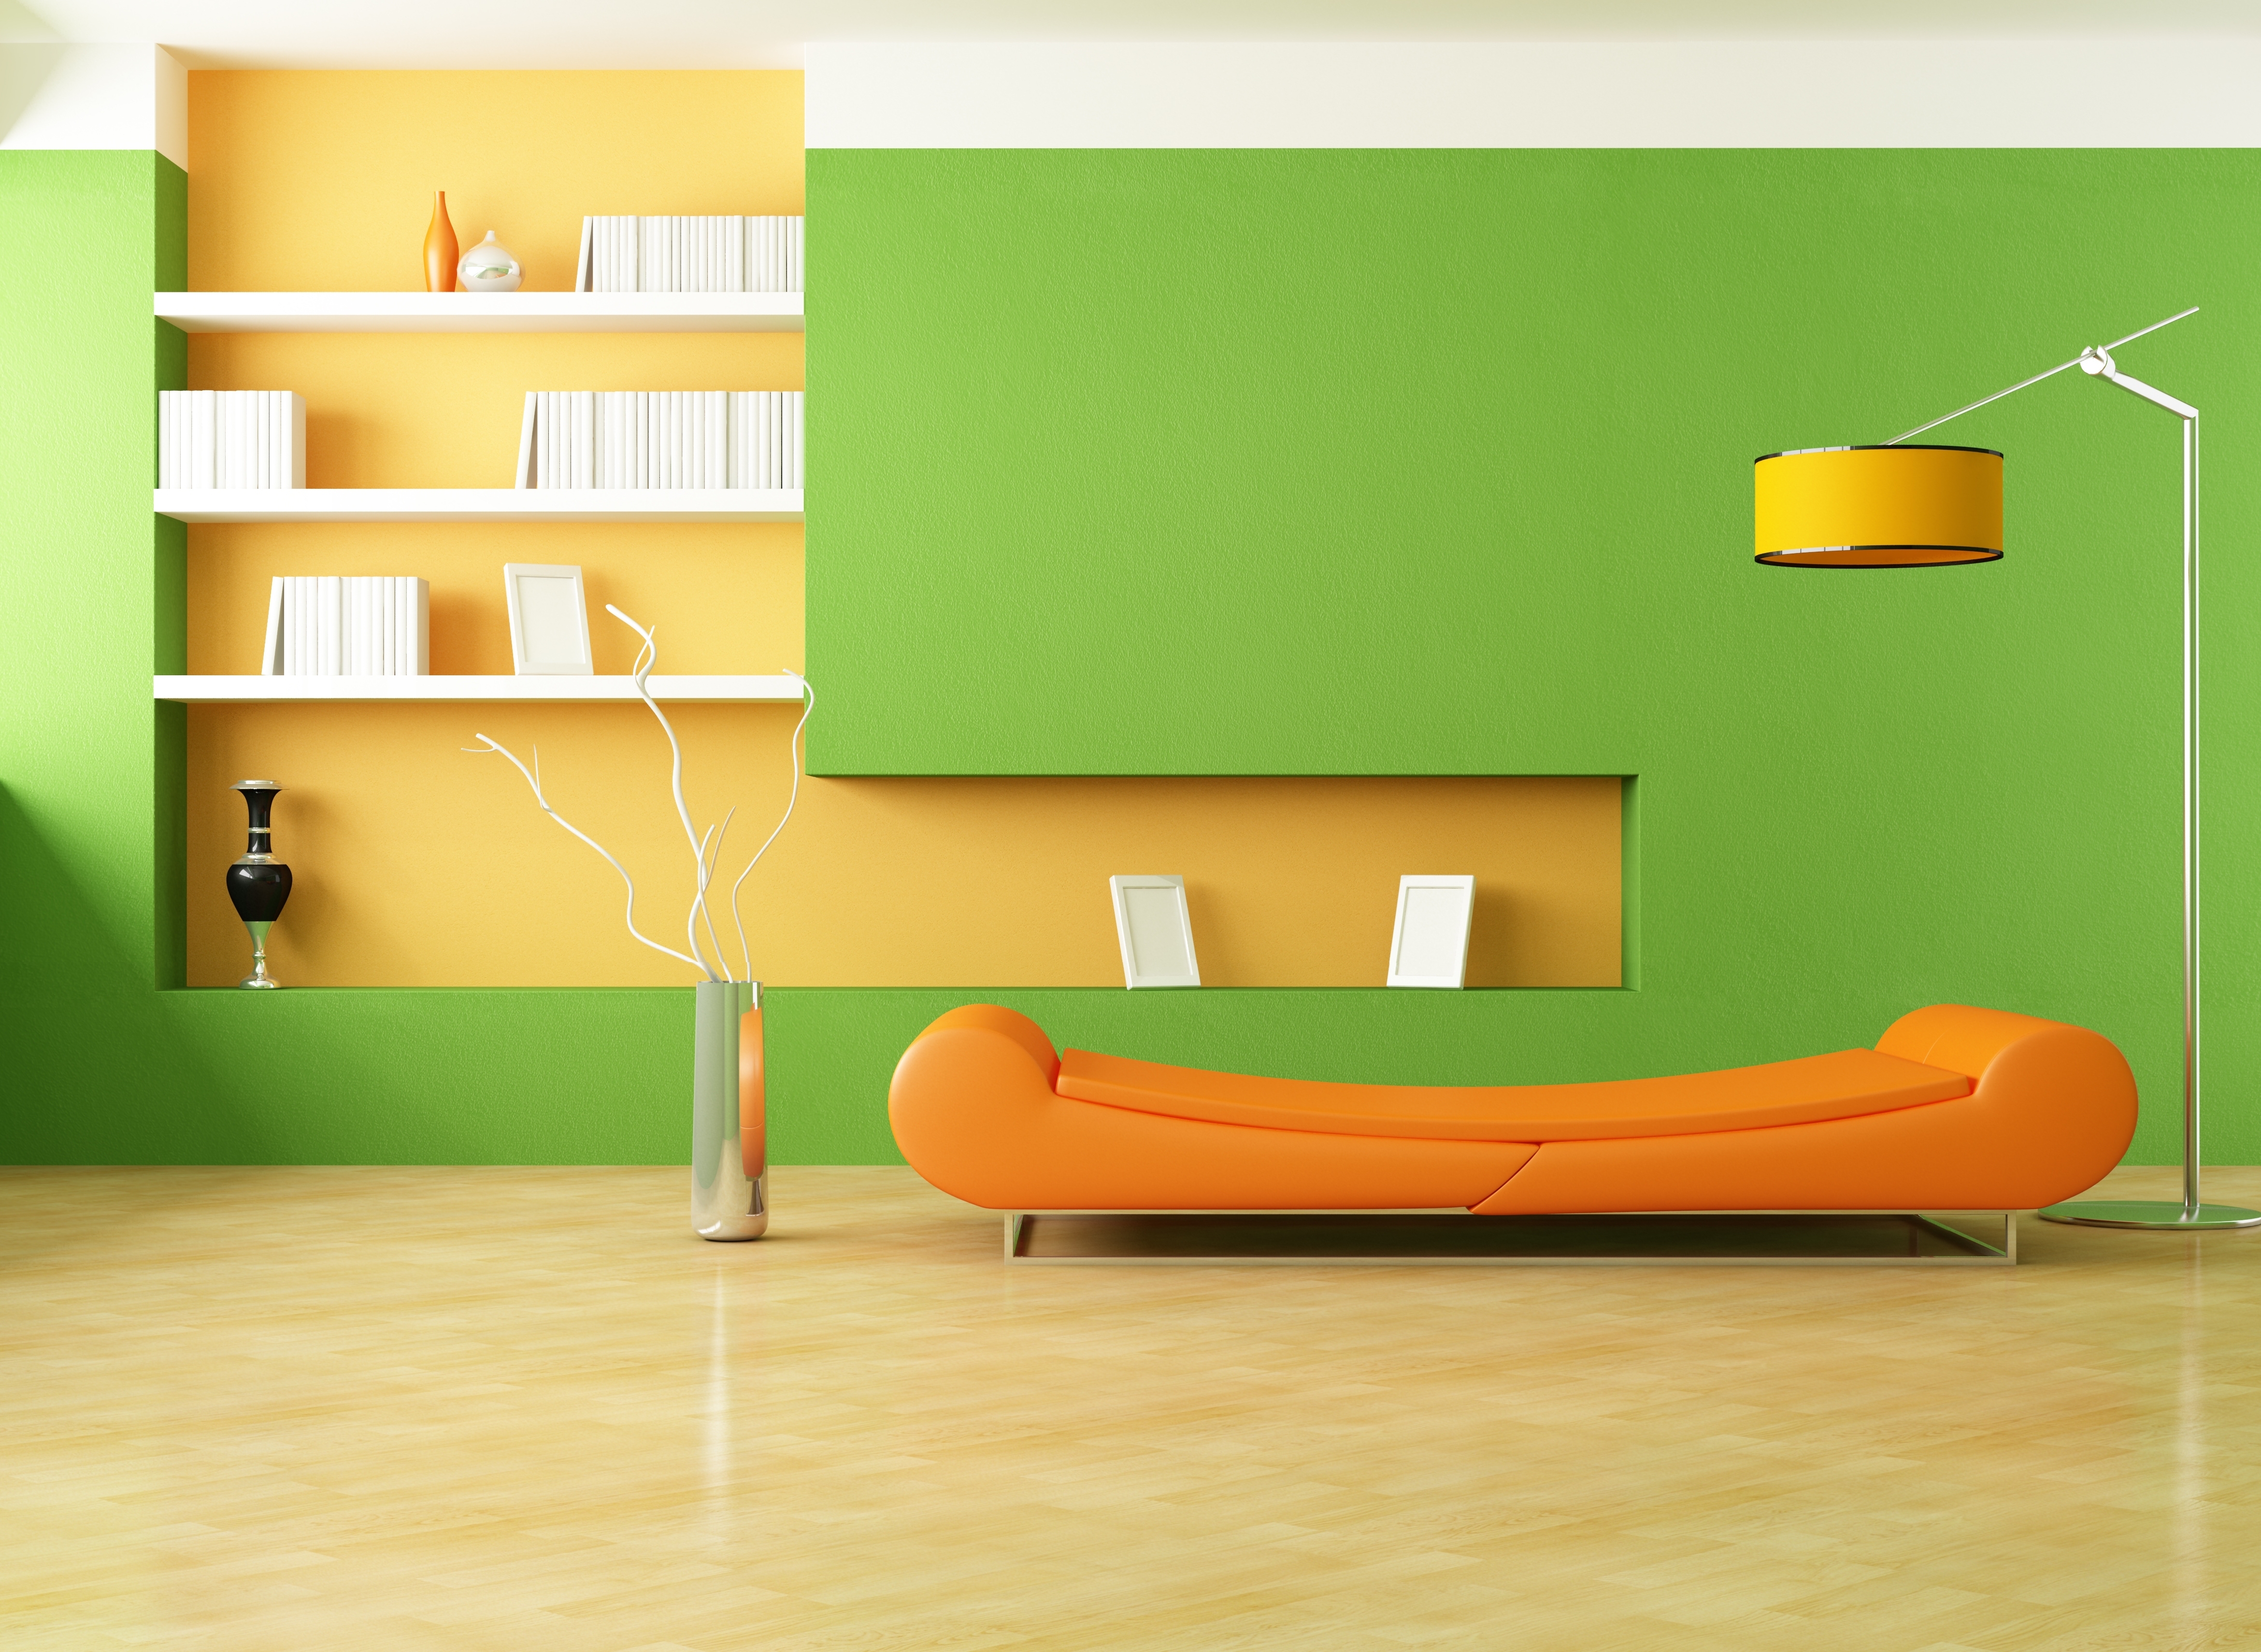 minimalism, design, interior, orange, miscellanea, miscellaneous, lamp, room, style, sofa, vases